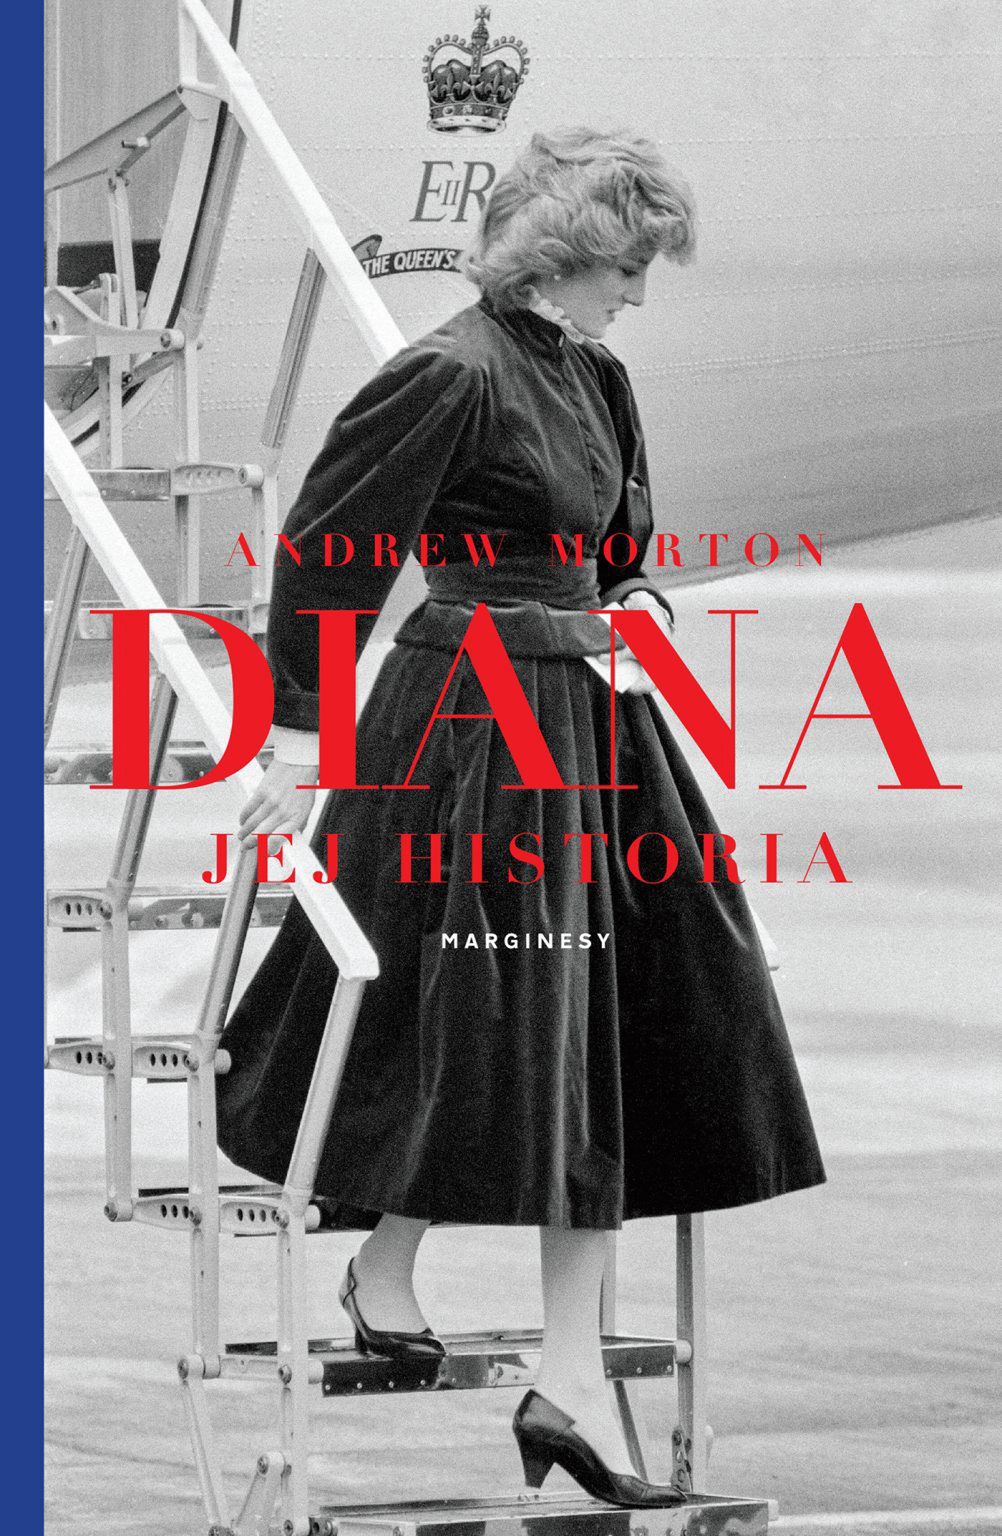 Okładka książki Andrew Mortona pt. "Diana. Jej historia" 